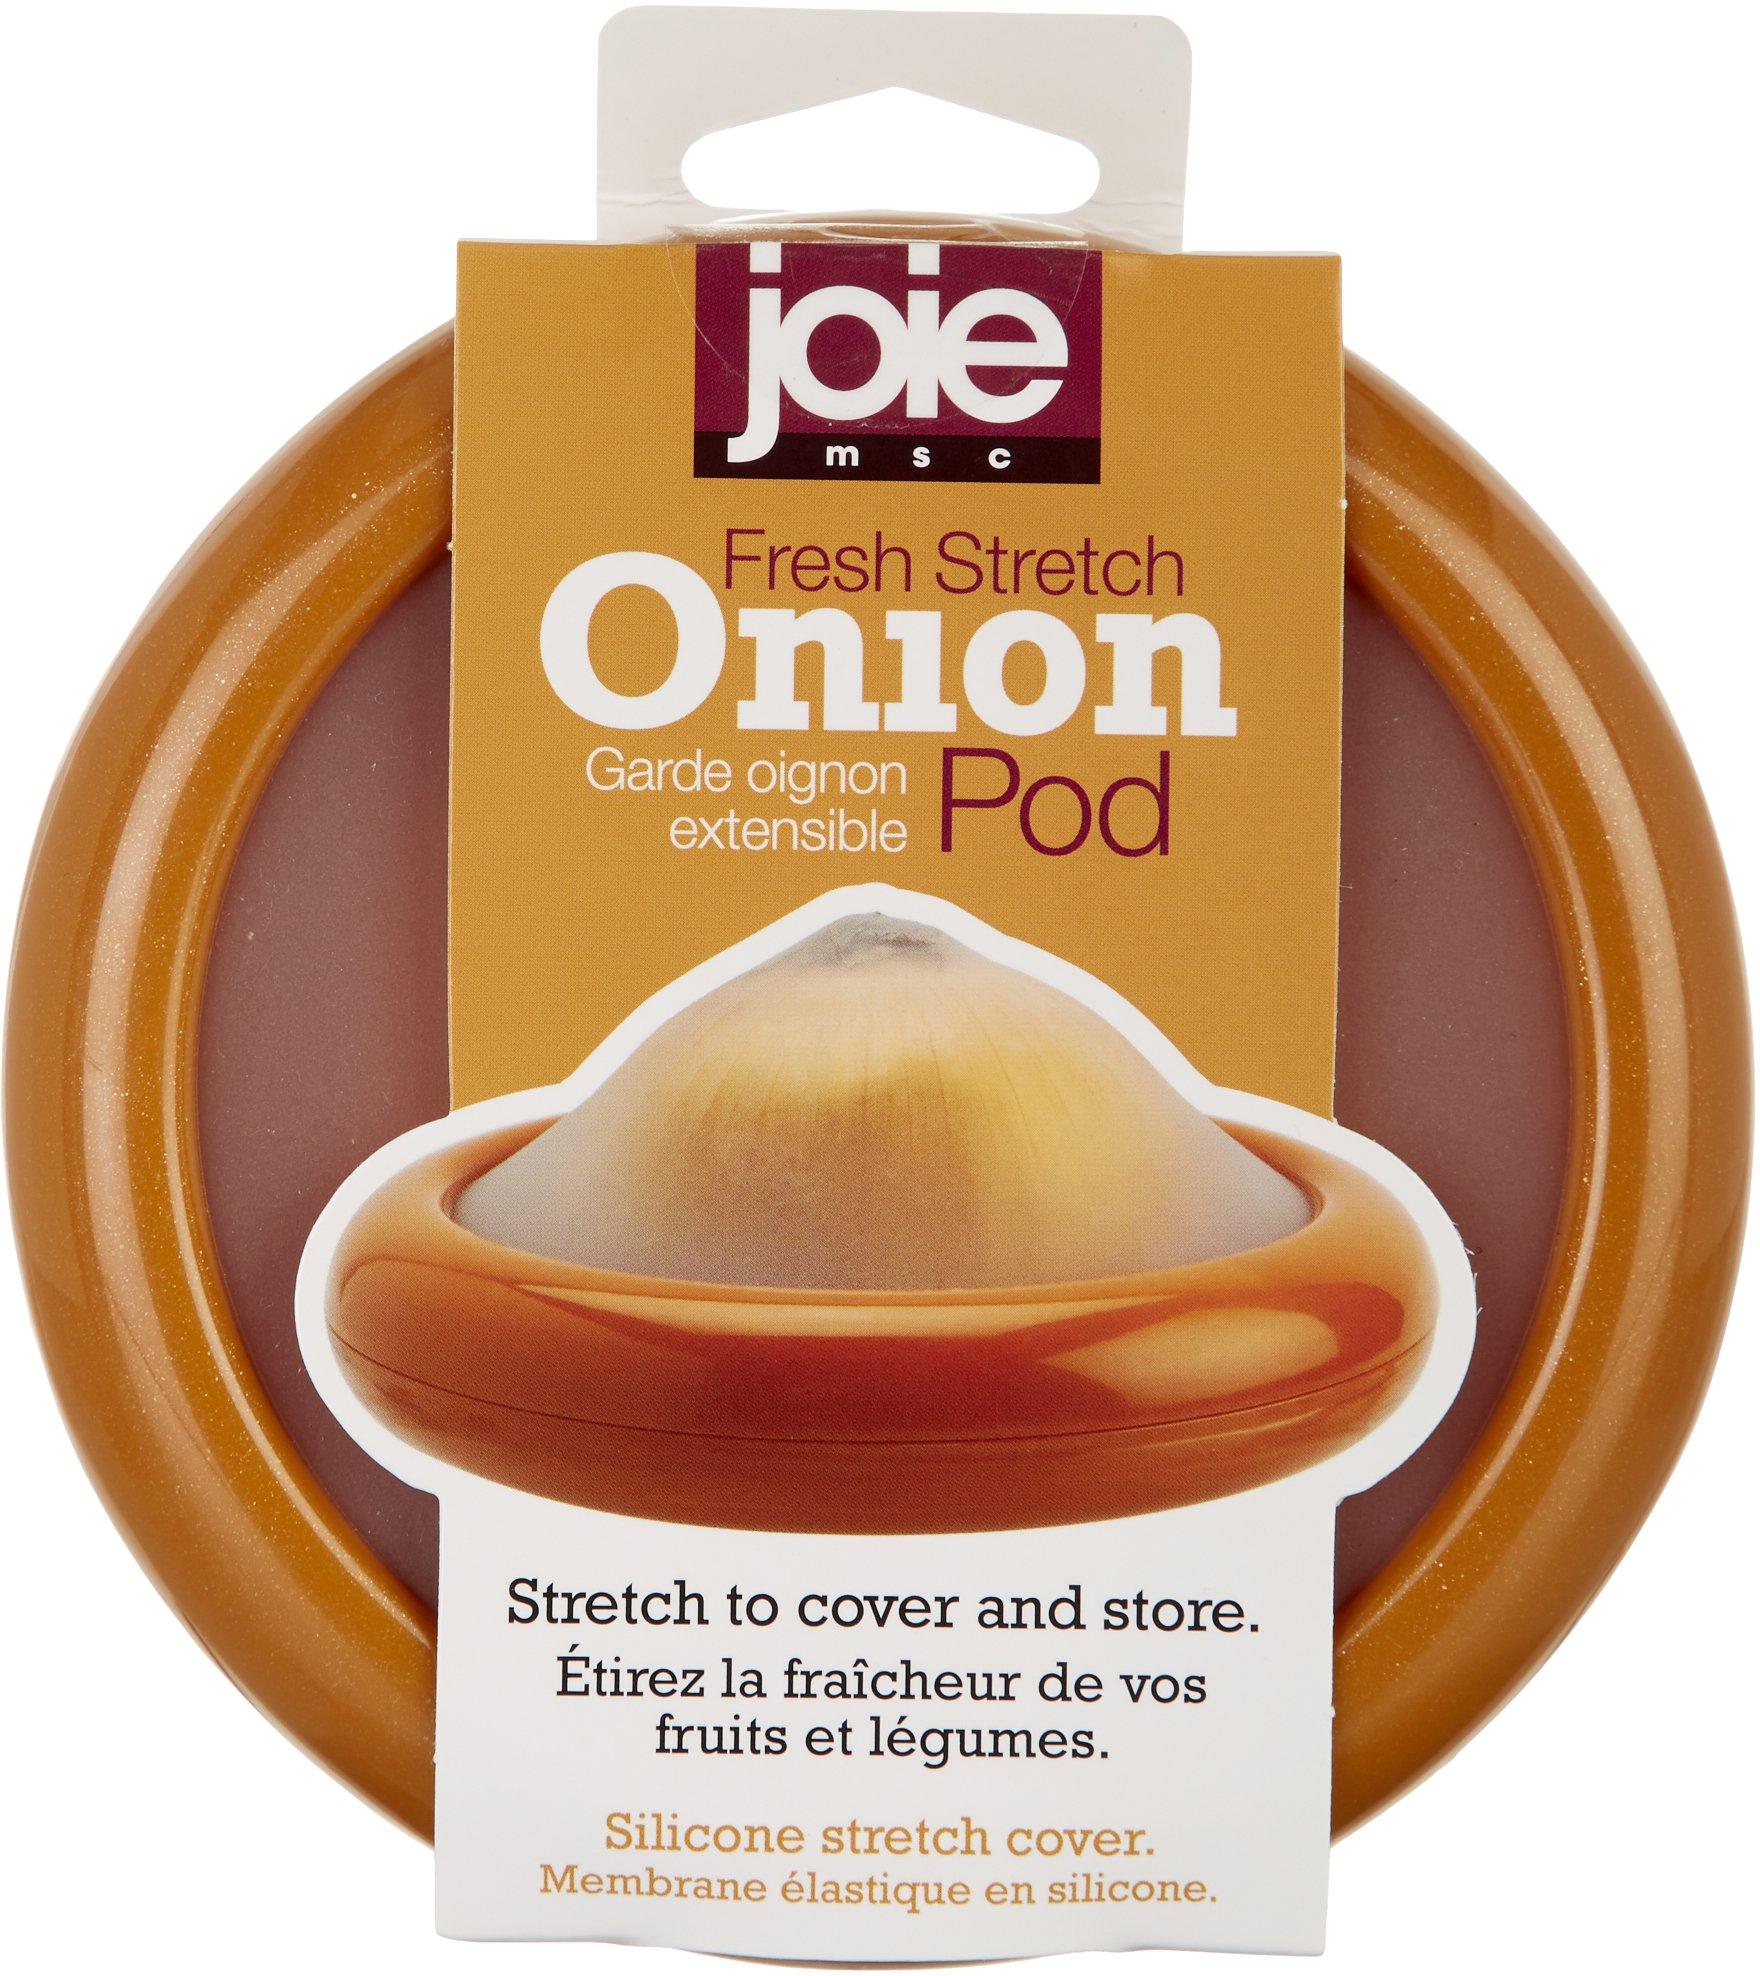 Joie Onion Pod Cover